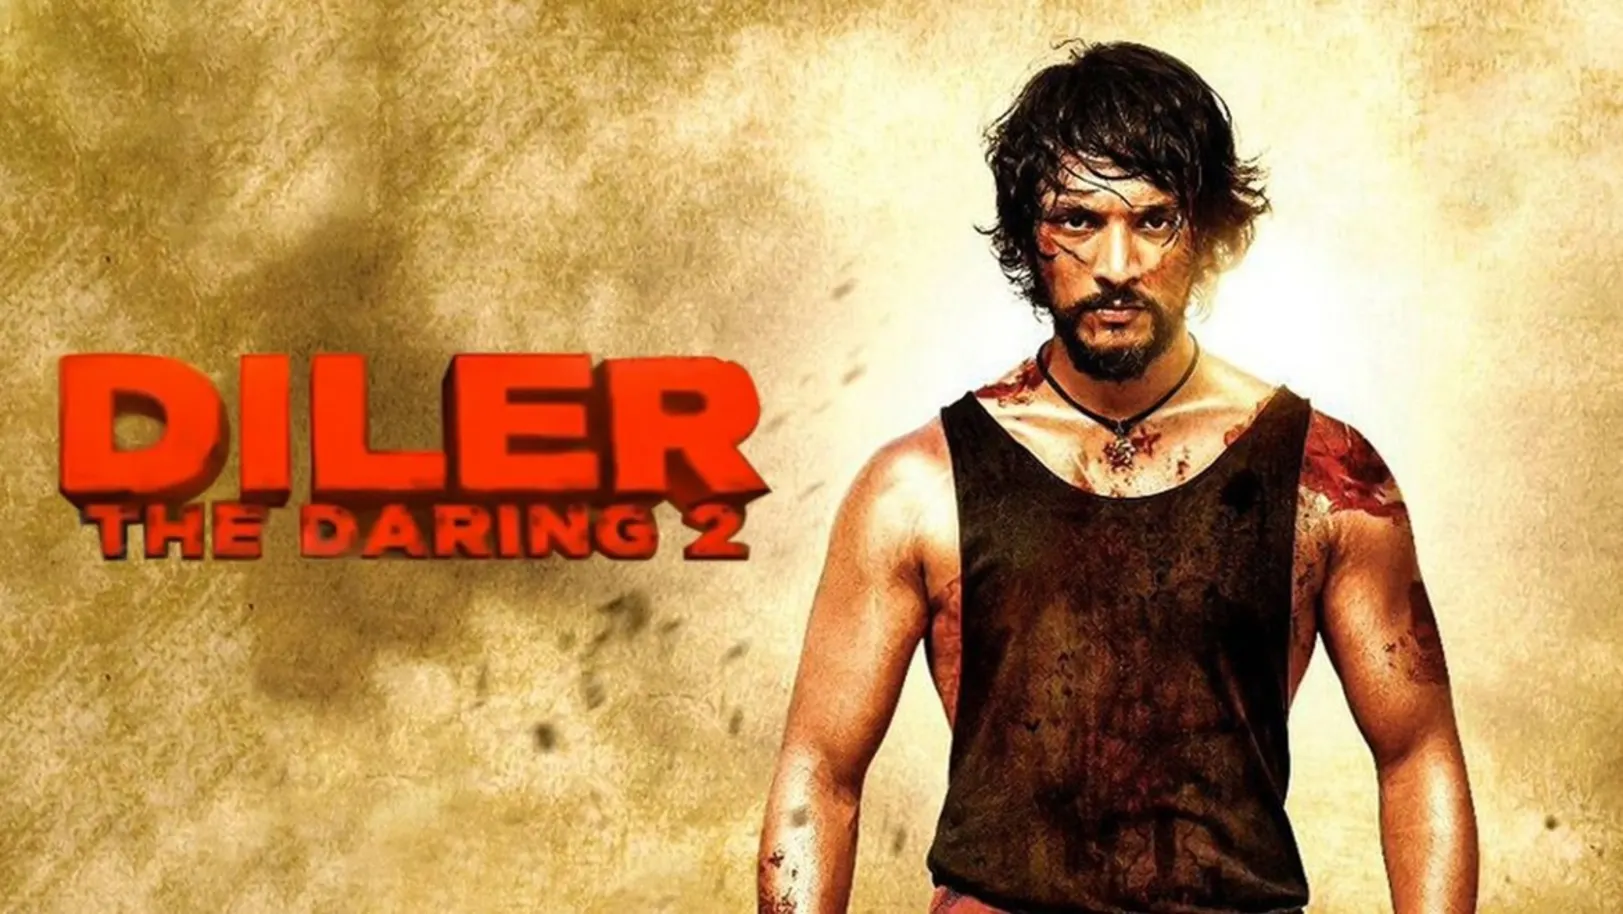 Diler - The Daring 2 Streaming Now On Zee Cinema HD